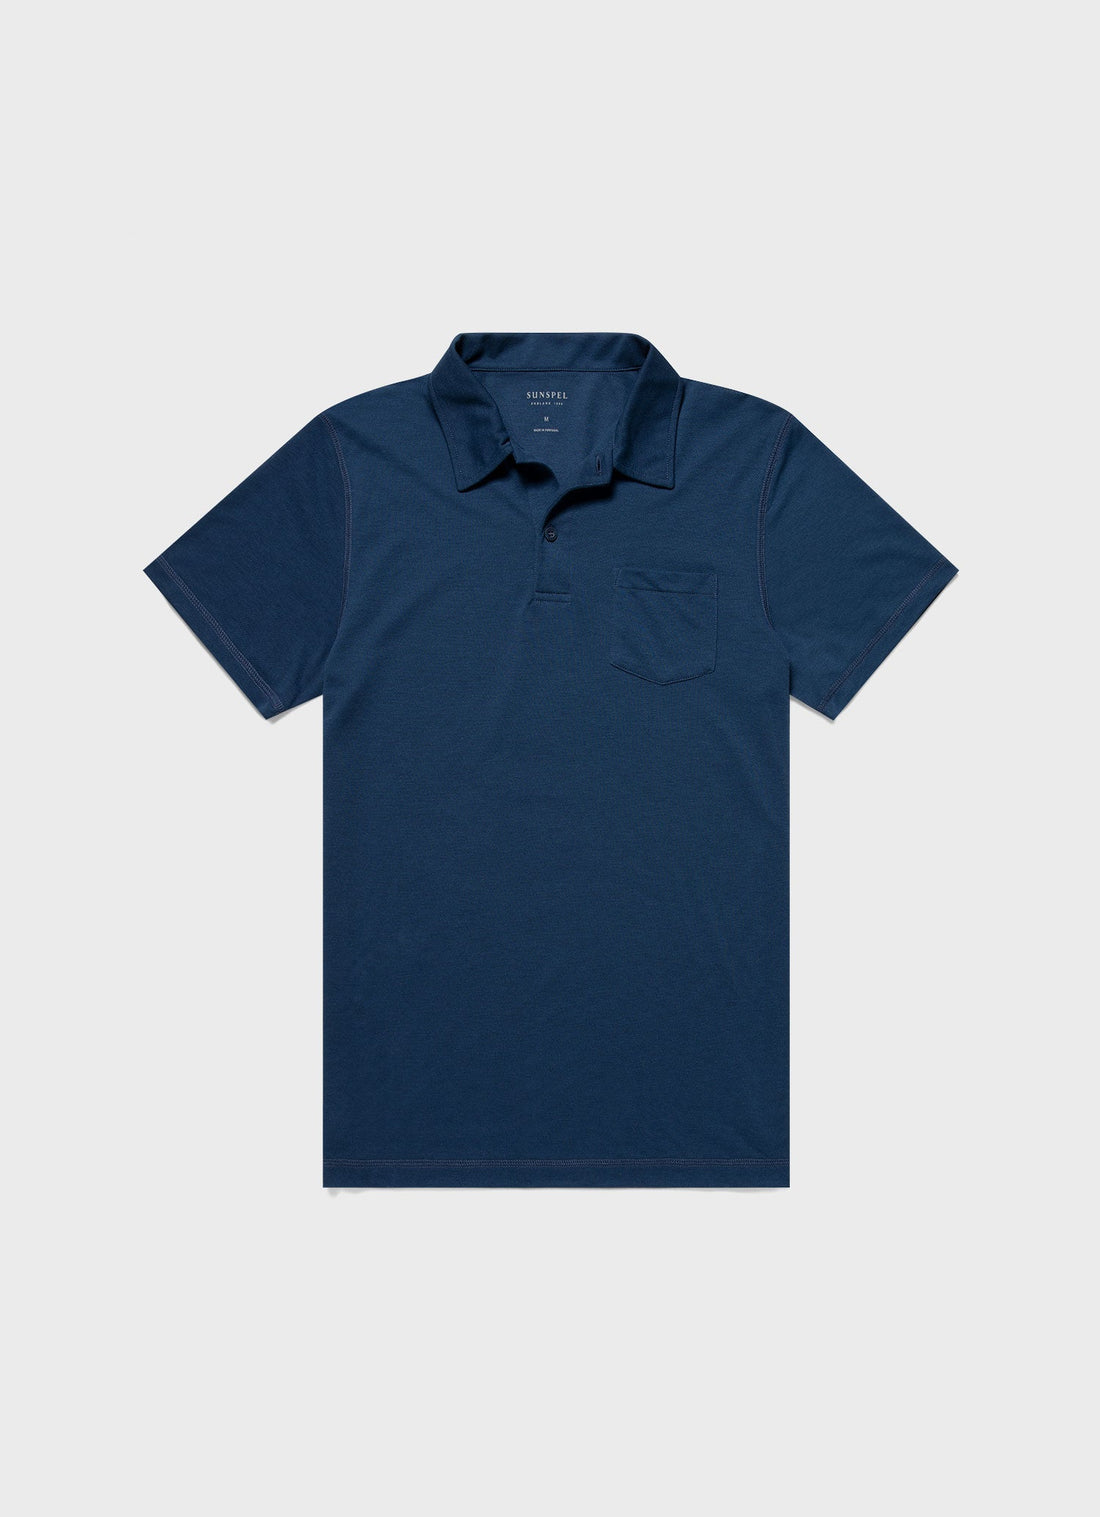 Men's DriRelease Active Polo Shirt in Marine Blue